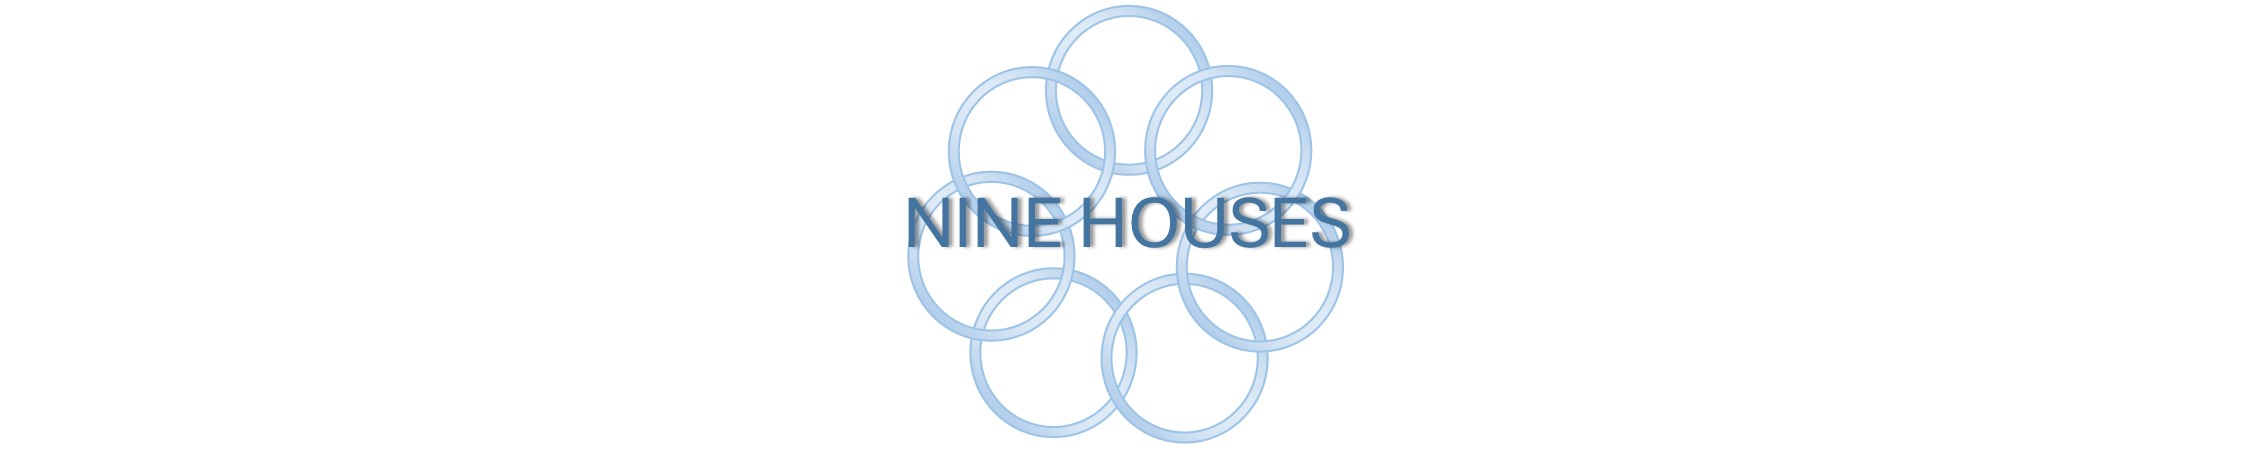 Nine Houses-Extras